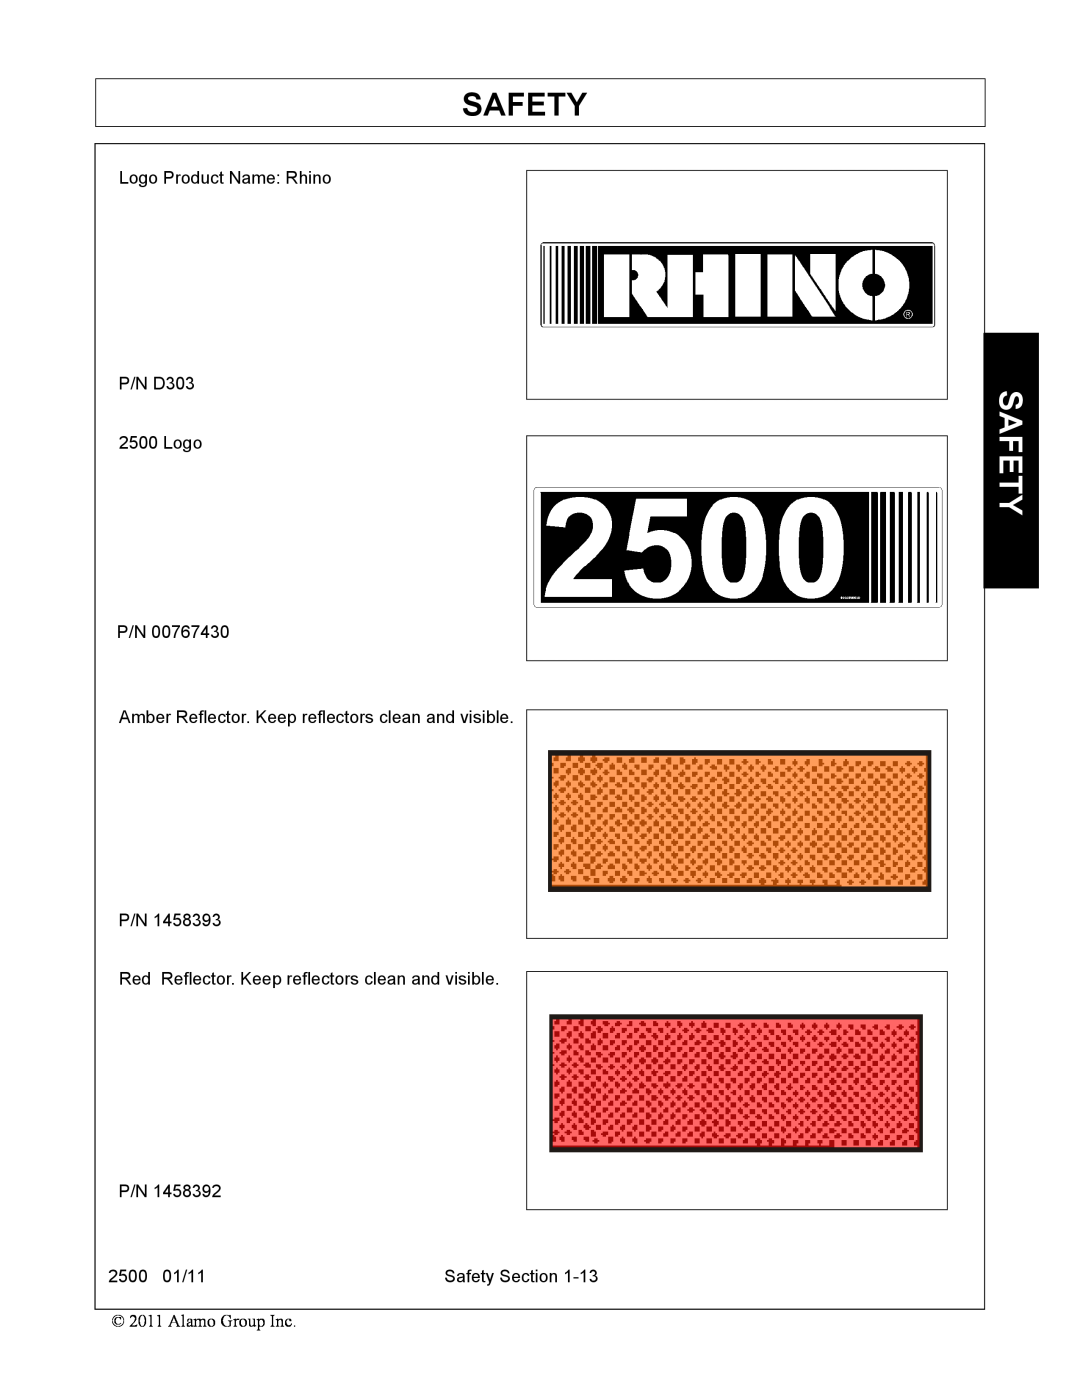 Alamo manual Safety, Logo Product Name Rhino P/N D303 2500 Logo P/N, Red Reflector. Keep reflectors clean and visible 